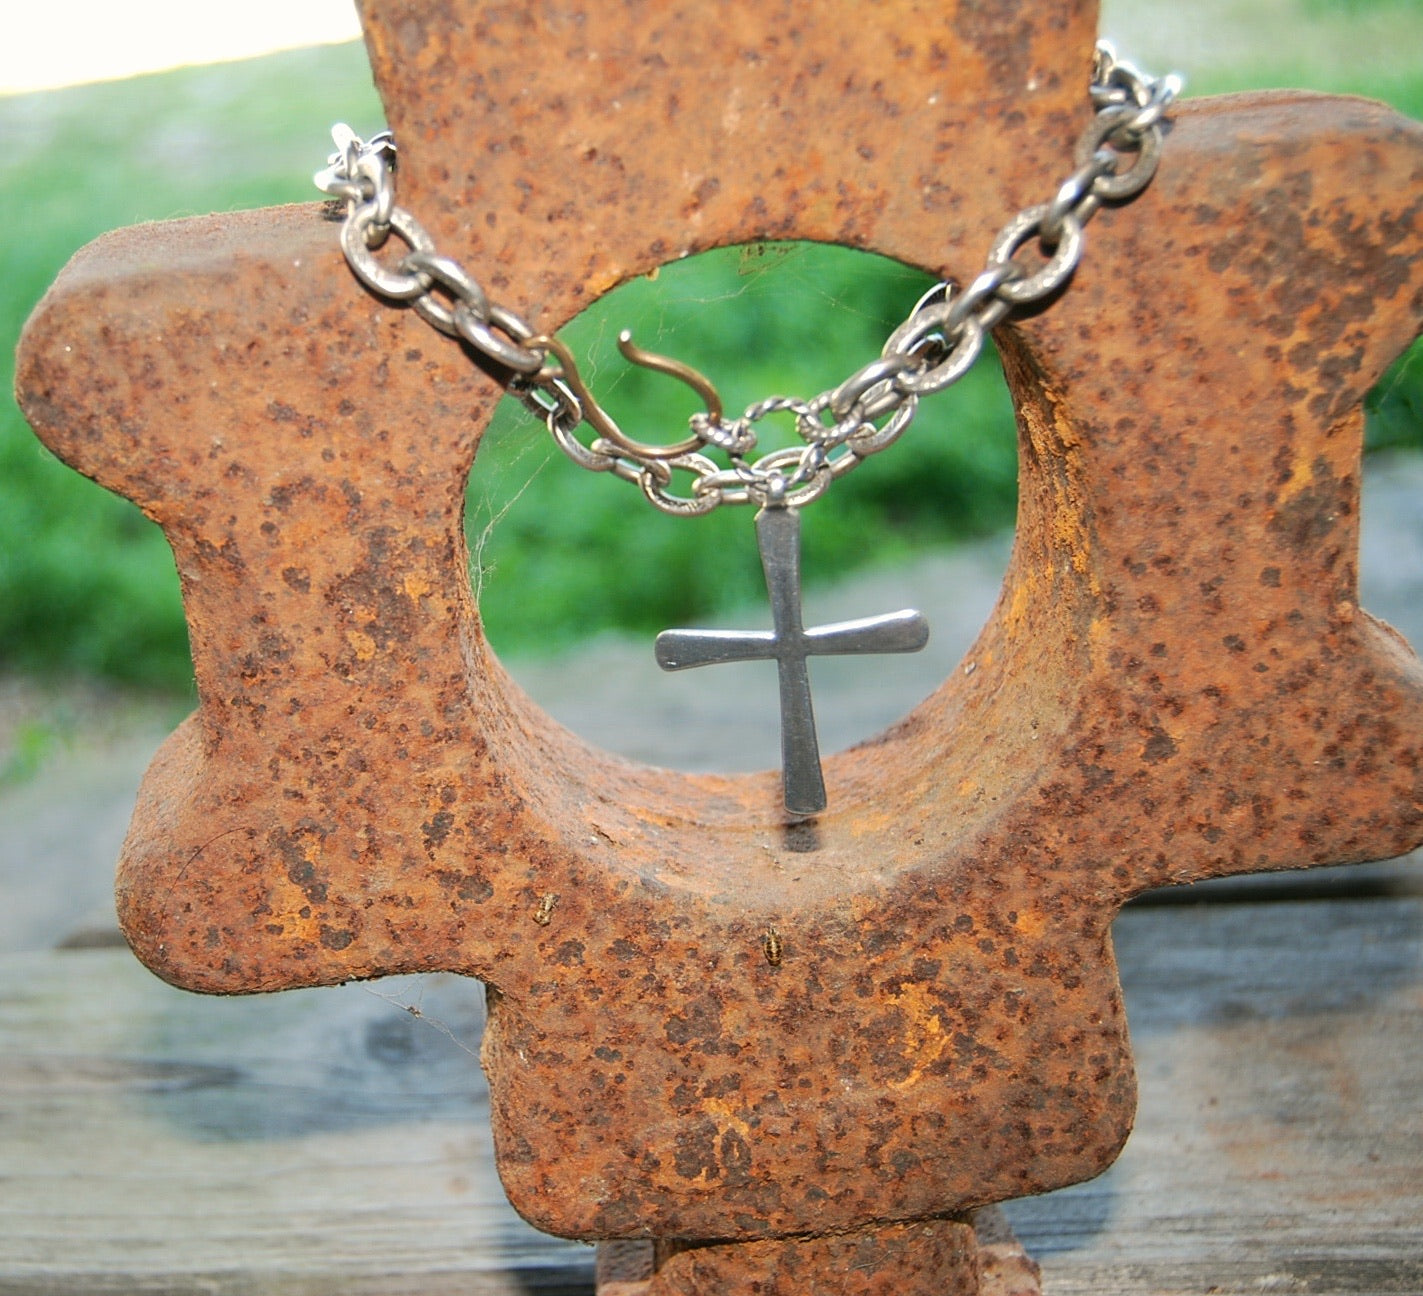 Silver Rustic Cross Necklace